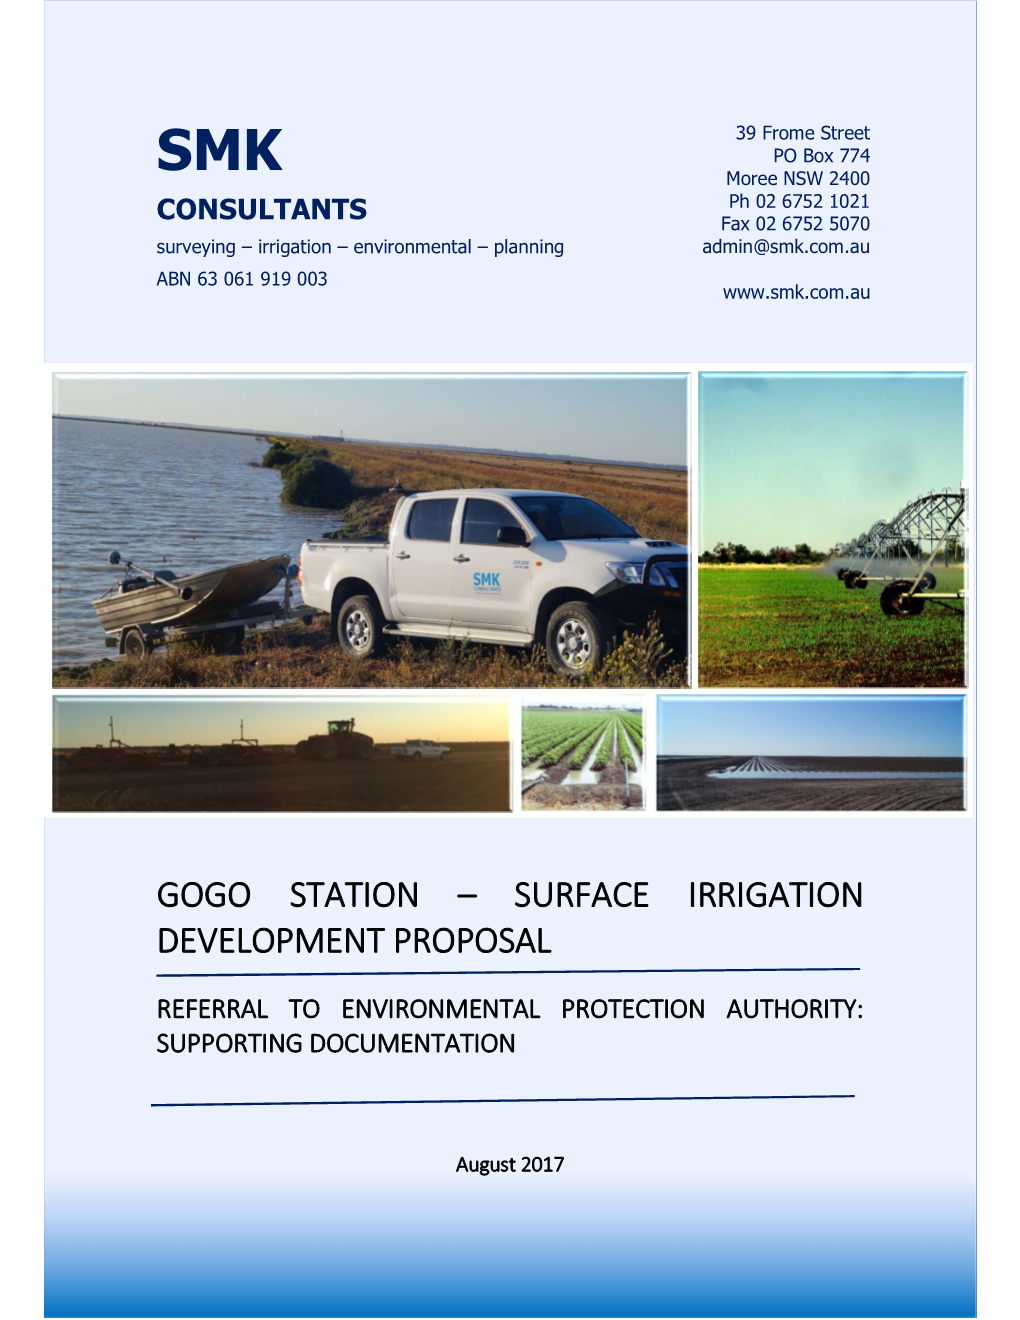 Gogo Station – Surface Irrigation Development Proposal